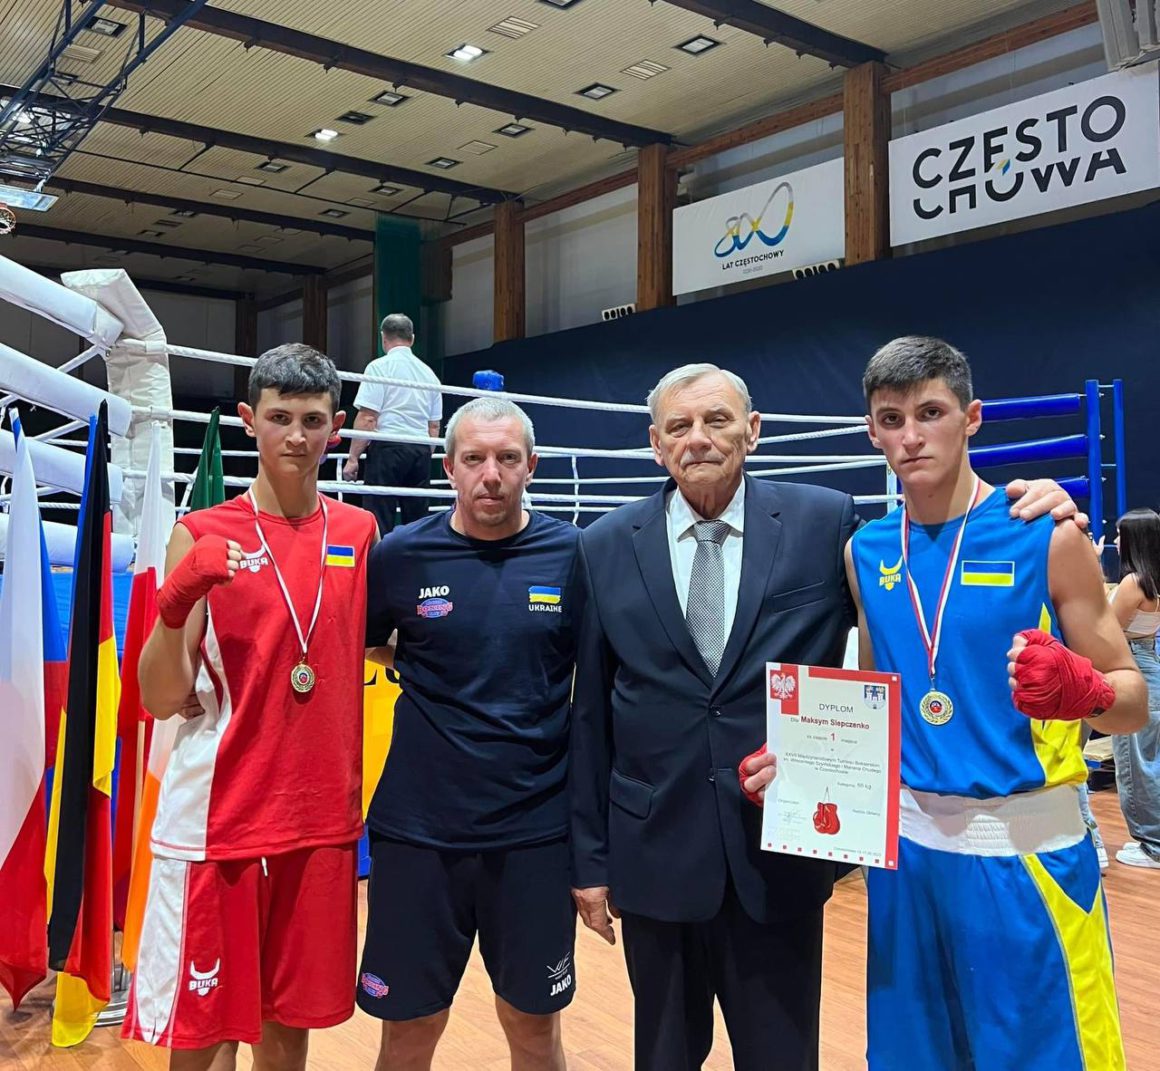 Українська команда завоювала перше загальнокомандне місце на міжнародному турнірі в Польщі 